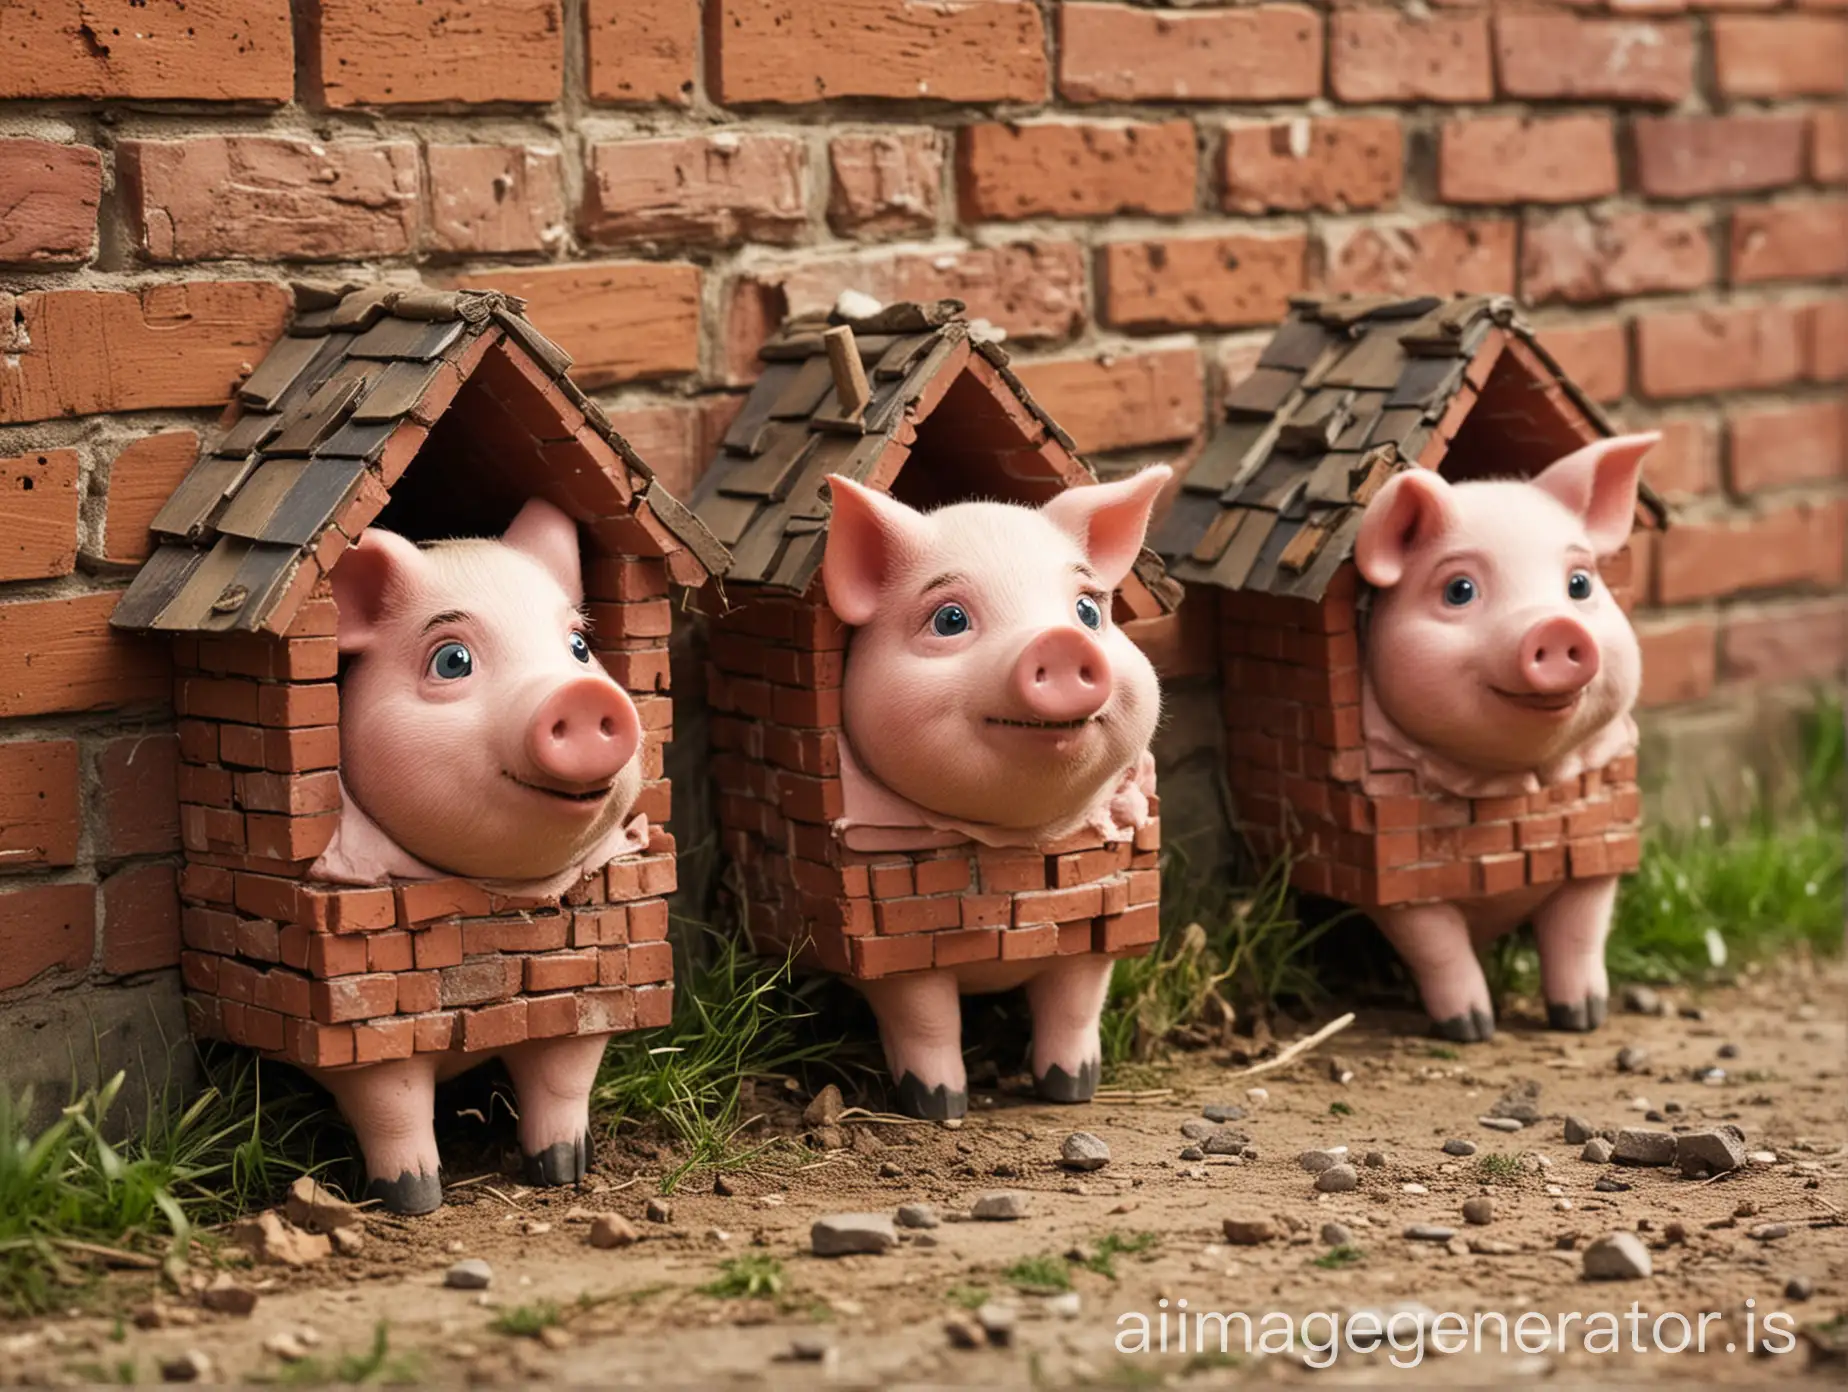 Three-Little-Pigs-in-Brick-Houses-Illustration